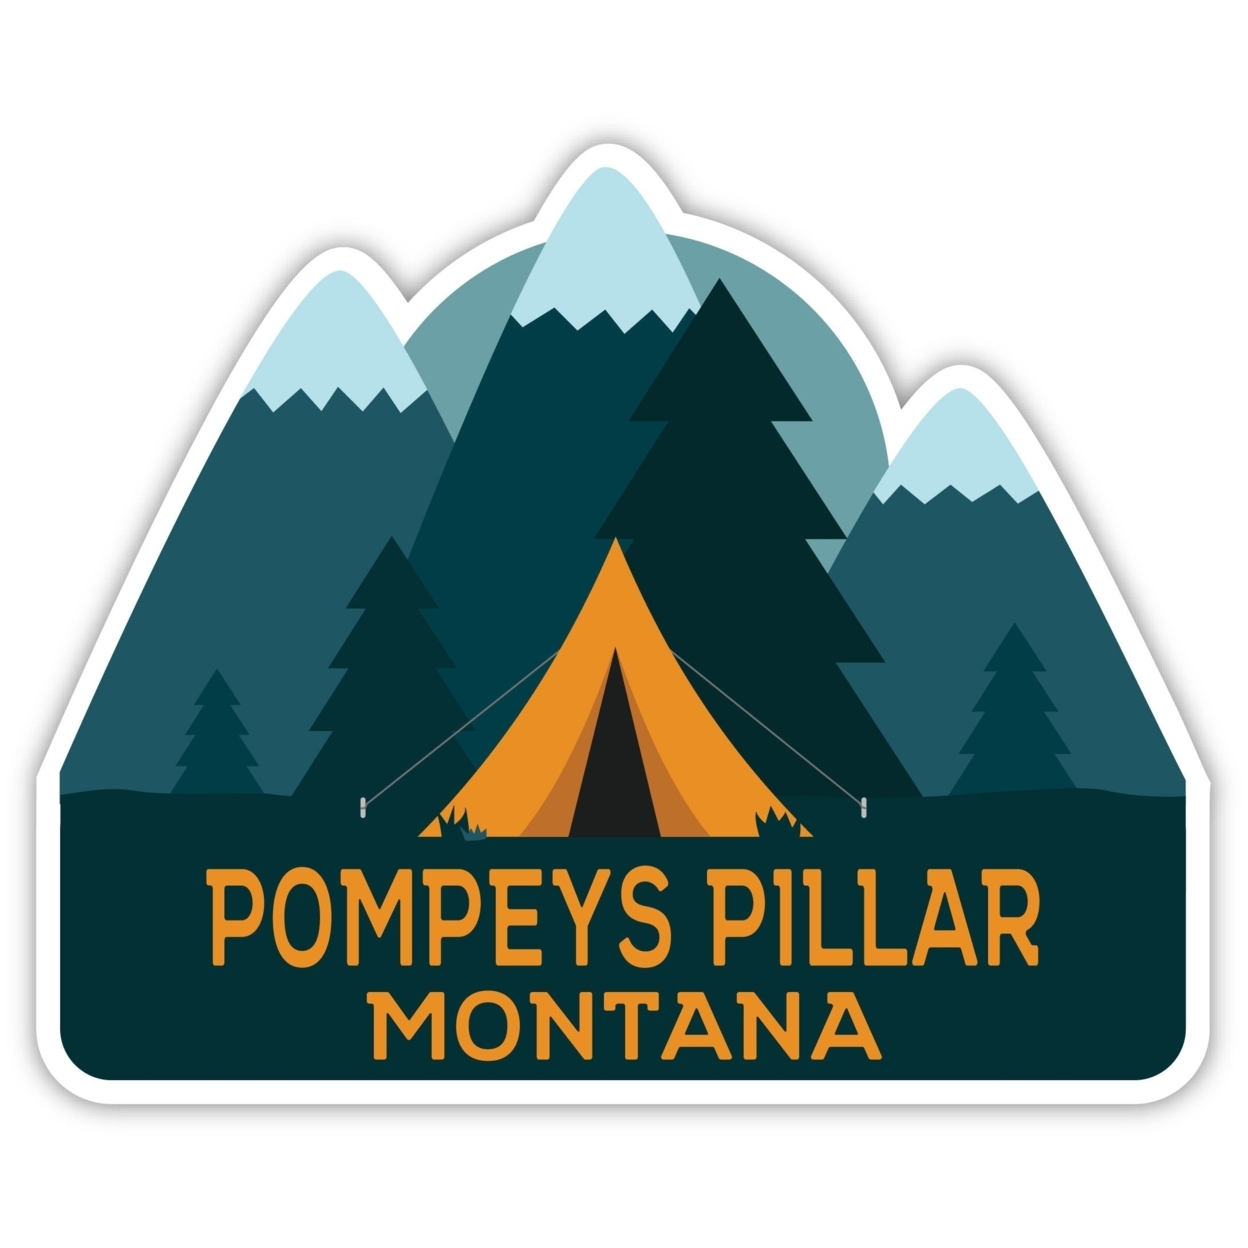 Pompeys Pillar Montana Souvenir Decorative Stickers (Choose Theme And Size) - Single Unit, 4-Inch, Tent